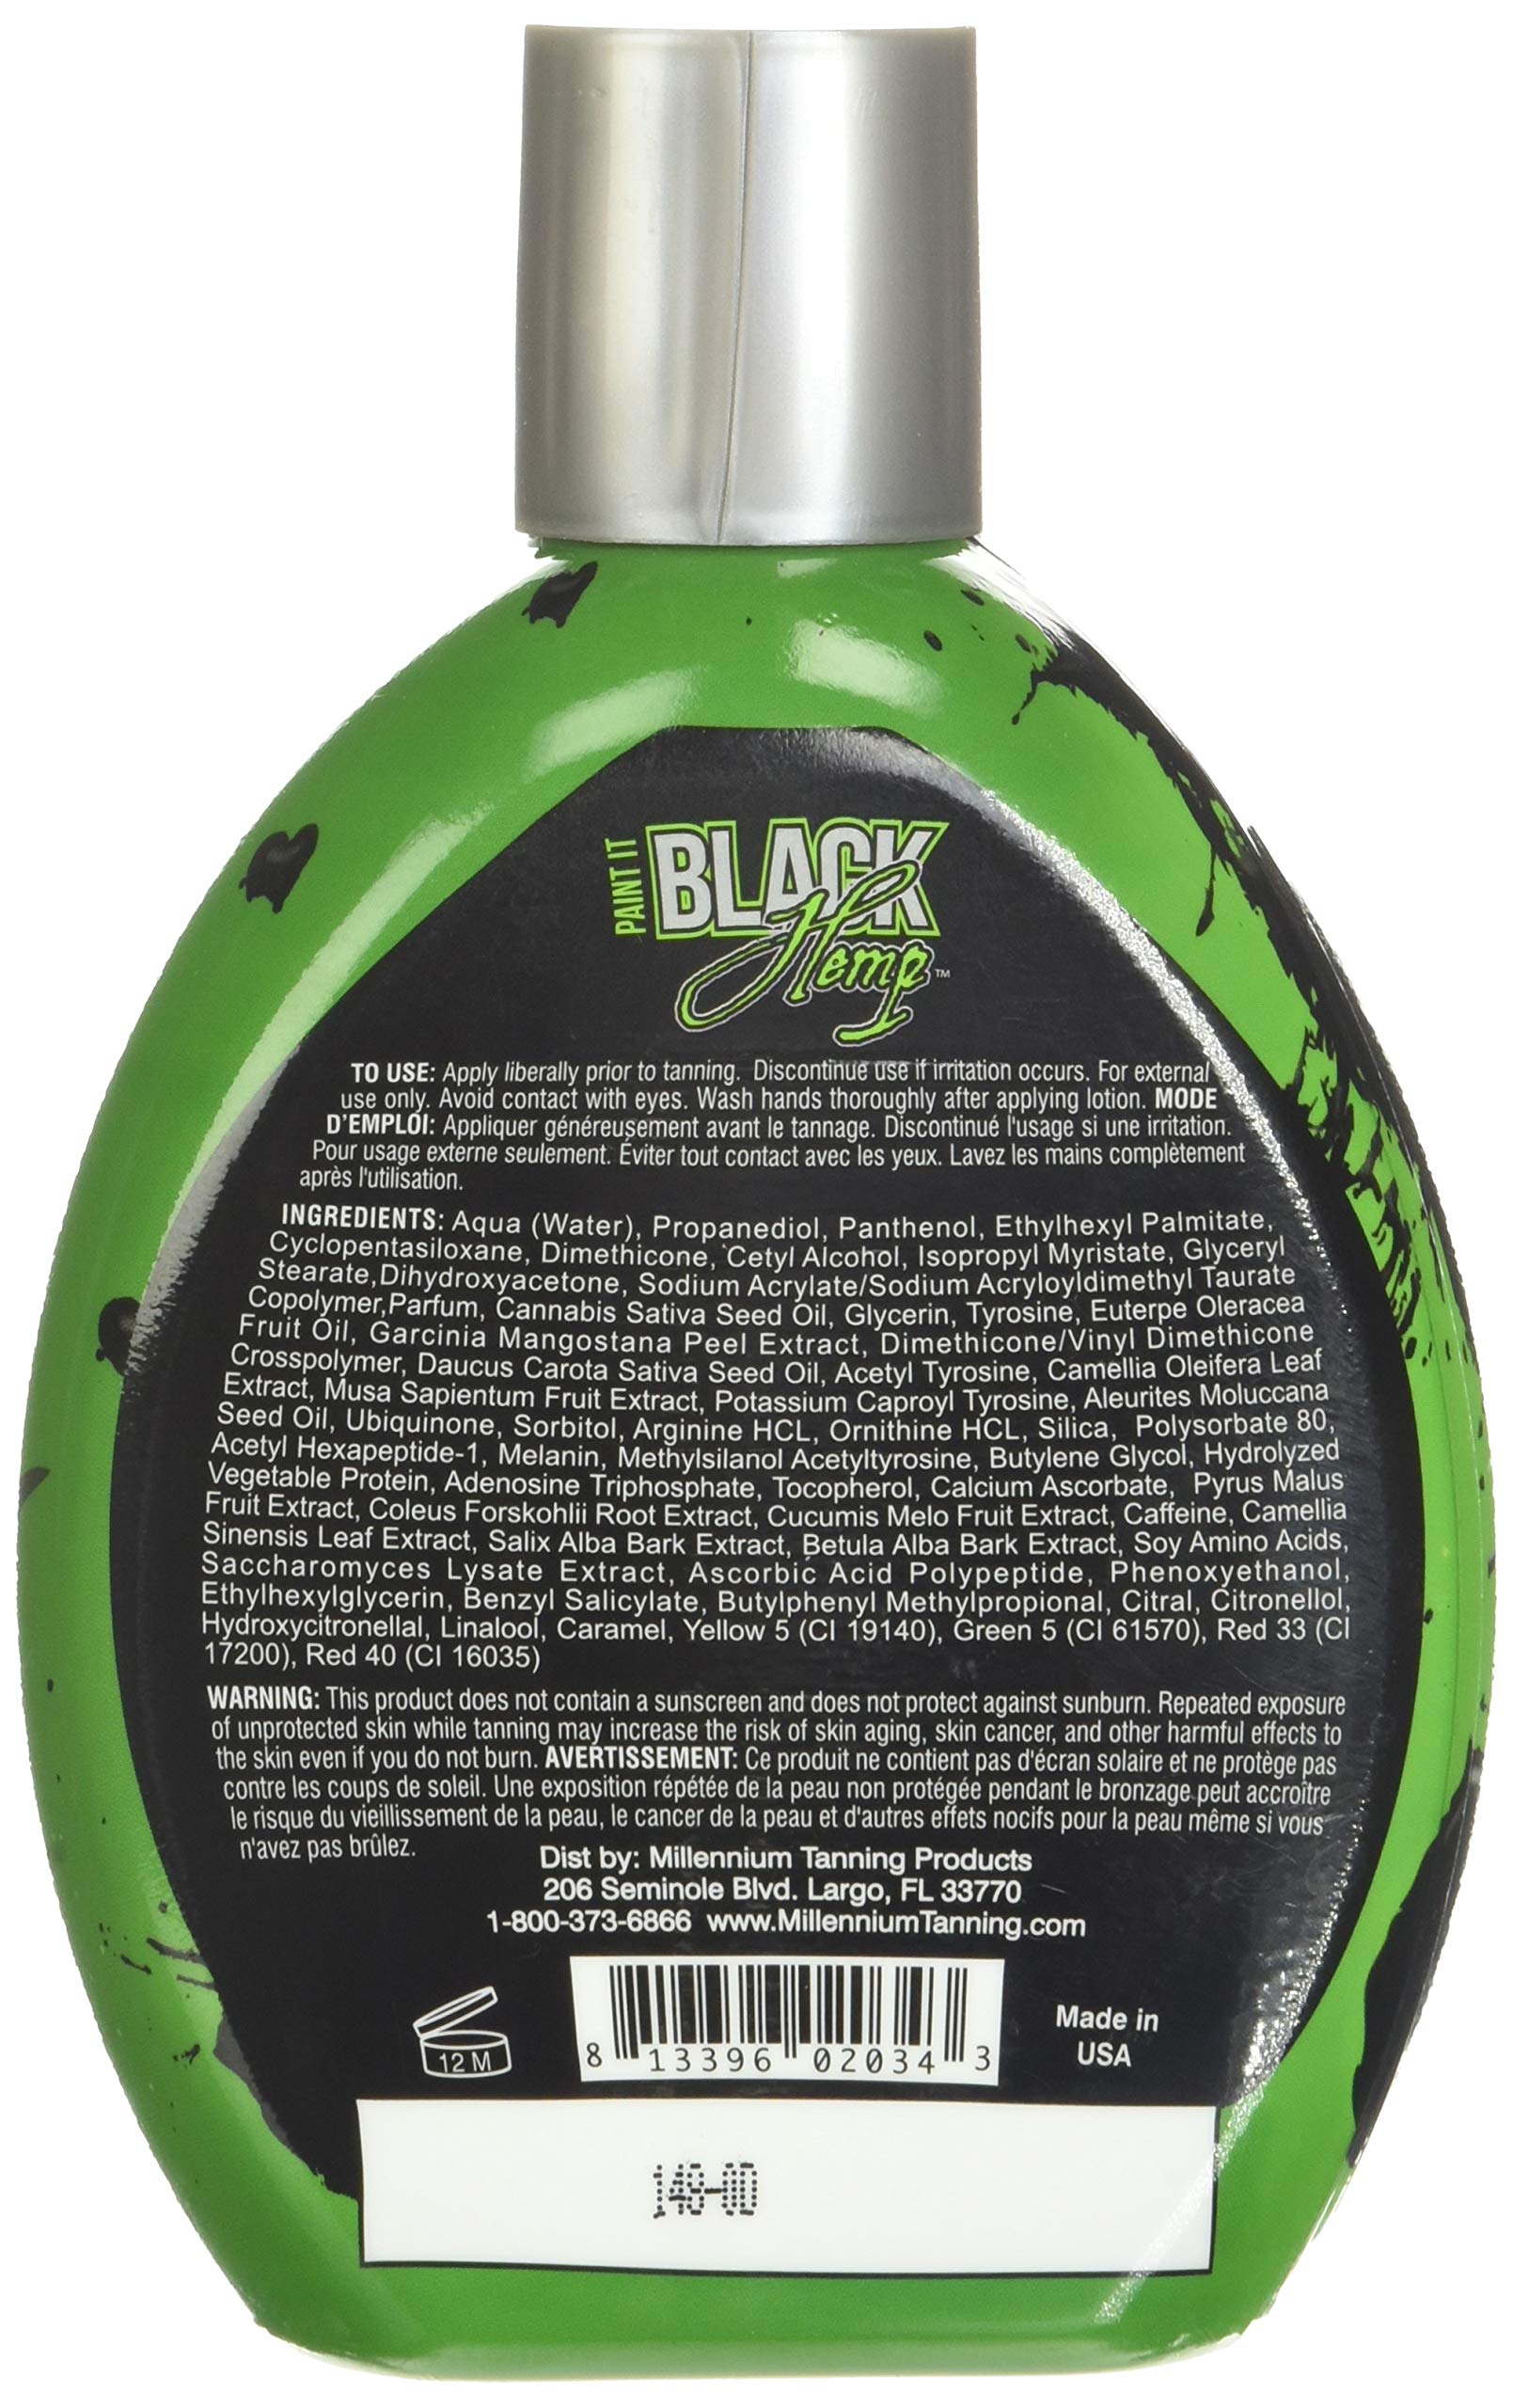 Millennium Tanning Products - Paint It Black Hemp Bronzer & Dark Tanning Lotion - 13.5 Ounce